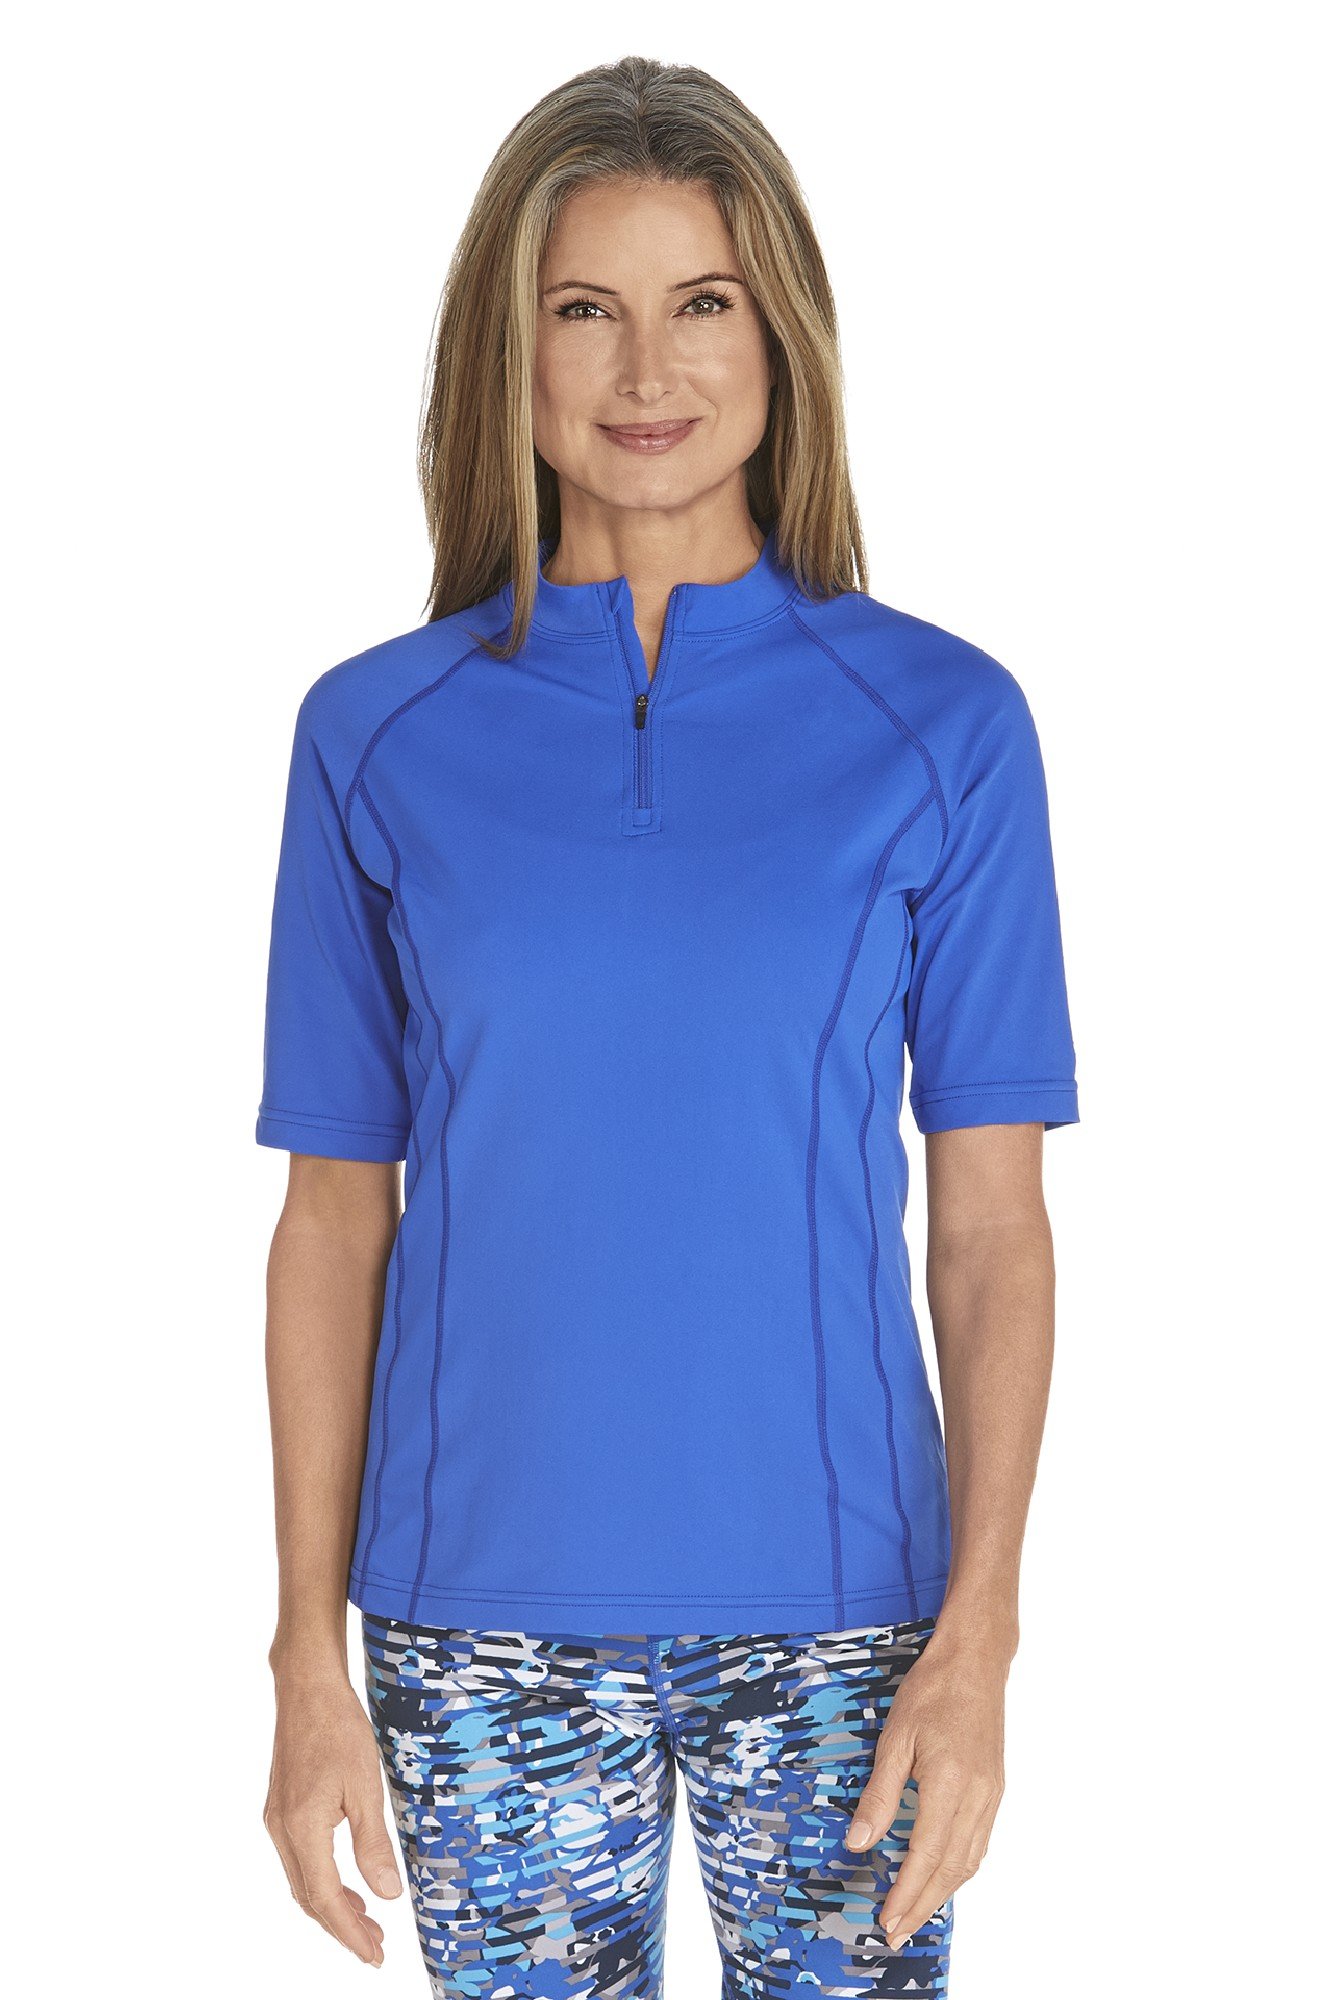 Coolibar - UV Swim shirt short sleeve women - Kobalt Blue